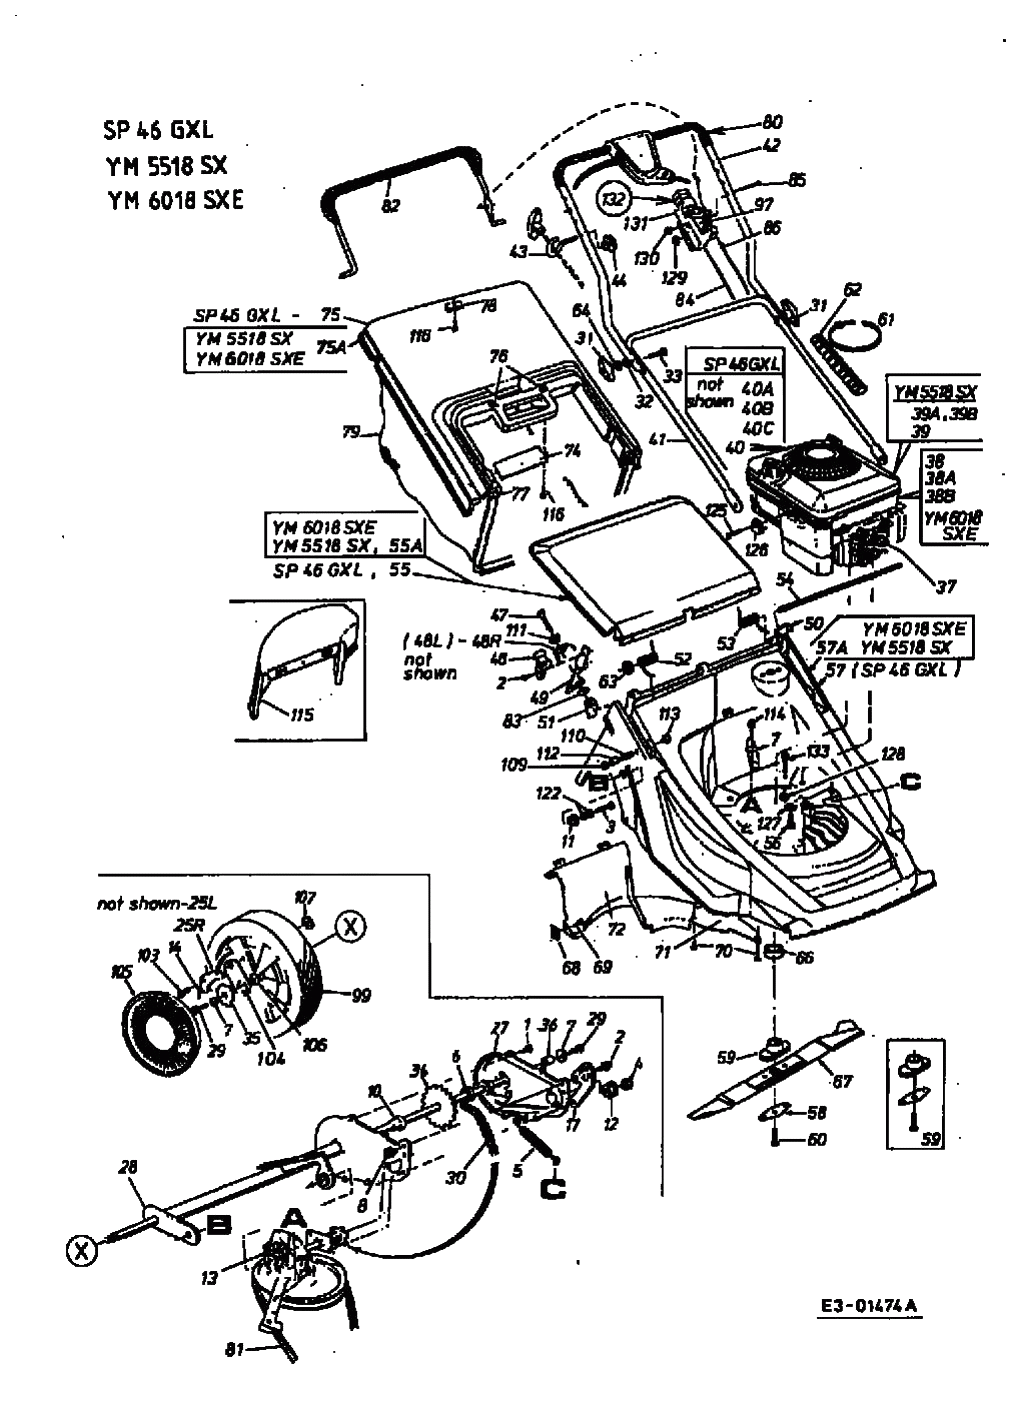 MTD Артикул 12B-X78C678 (год выпуска 2001). Основная деталировка